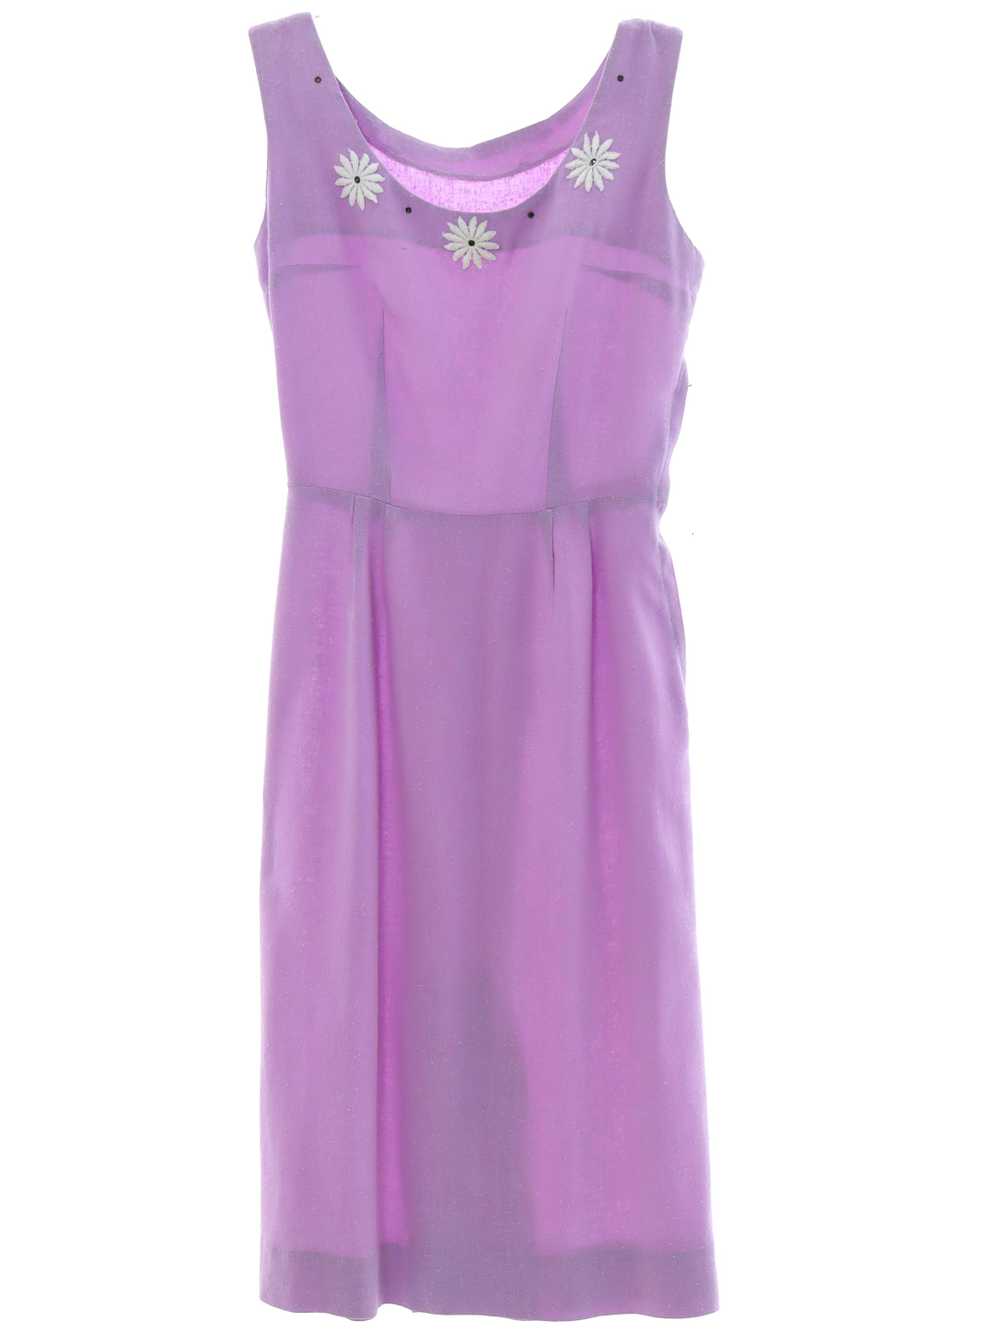 1960's Mod Linen Dress - image 1